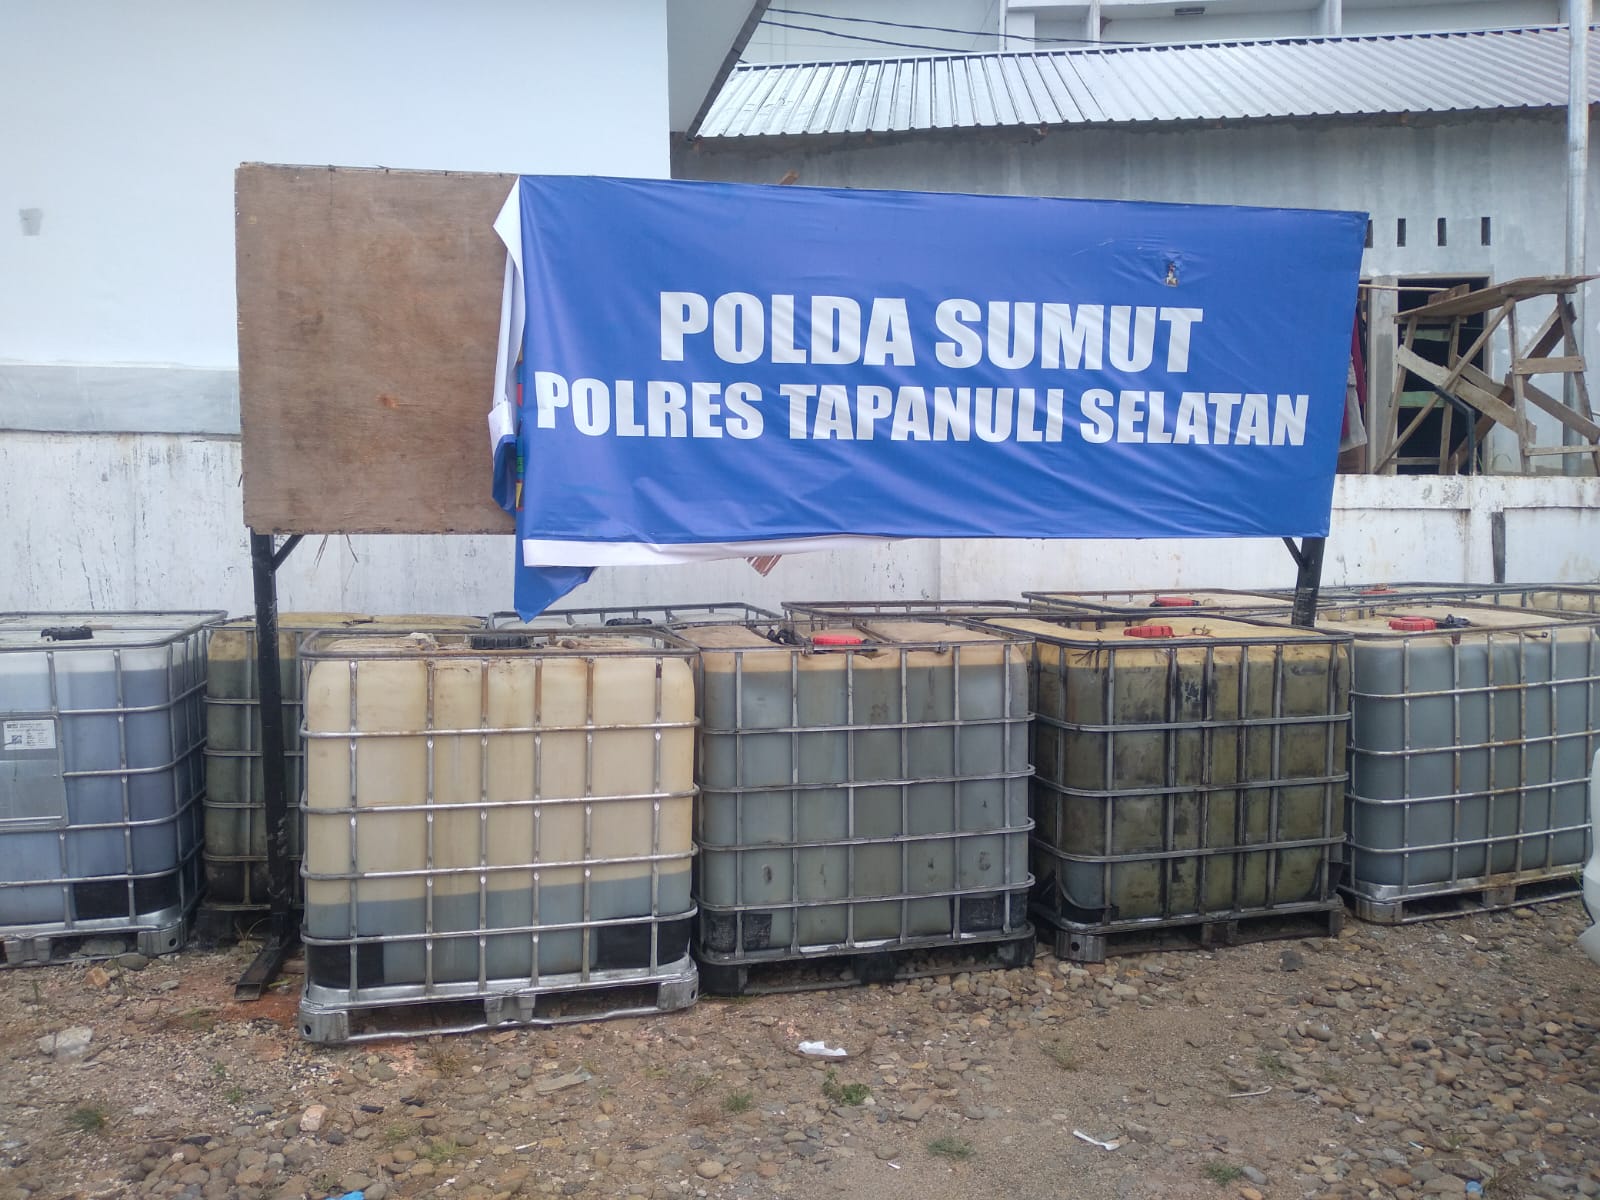 Polres Tapsel berhasil menyita barang bukti berupa 10 ton BBM bersubsidi jenis solar di Desa Tolang Jae, Kec. Sayur Matinggi. fhoto : Istimewa.